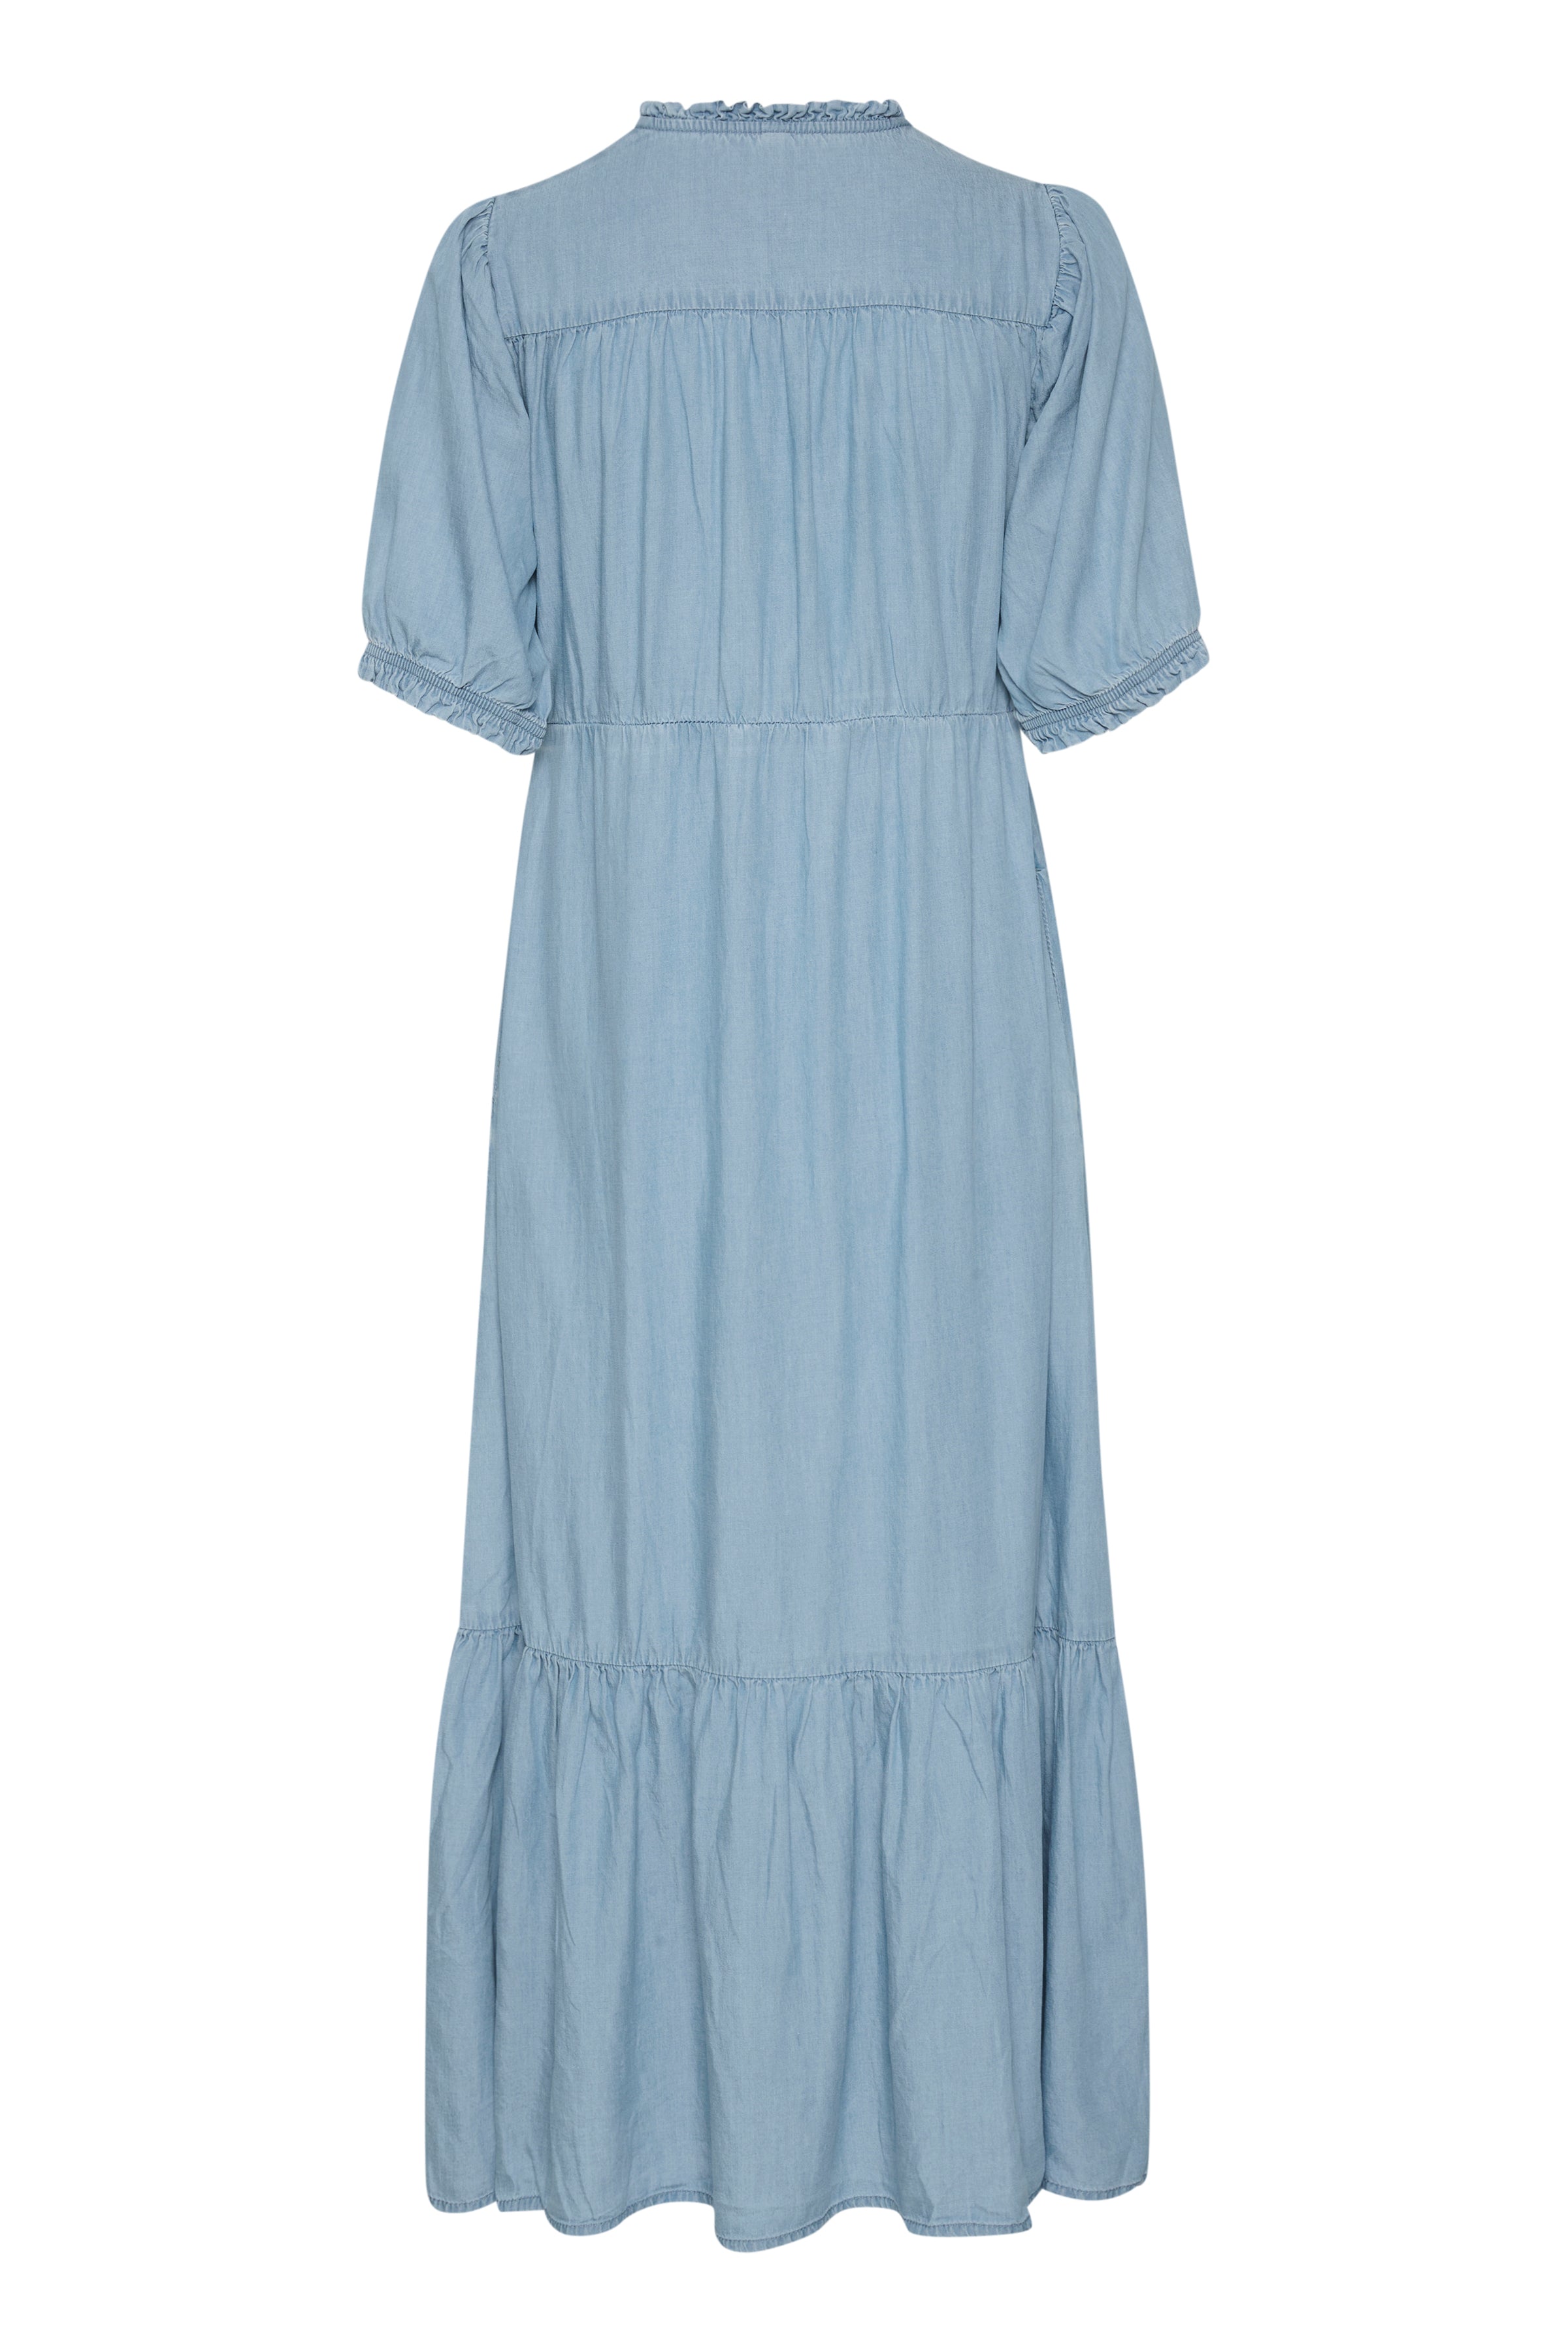 Aurelia Long Dress in Light Blue Wash